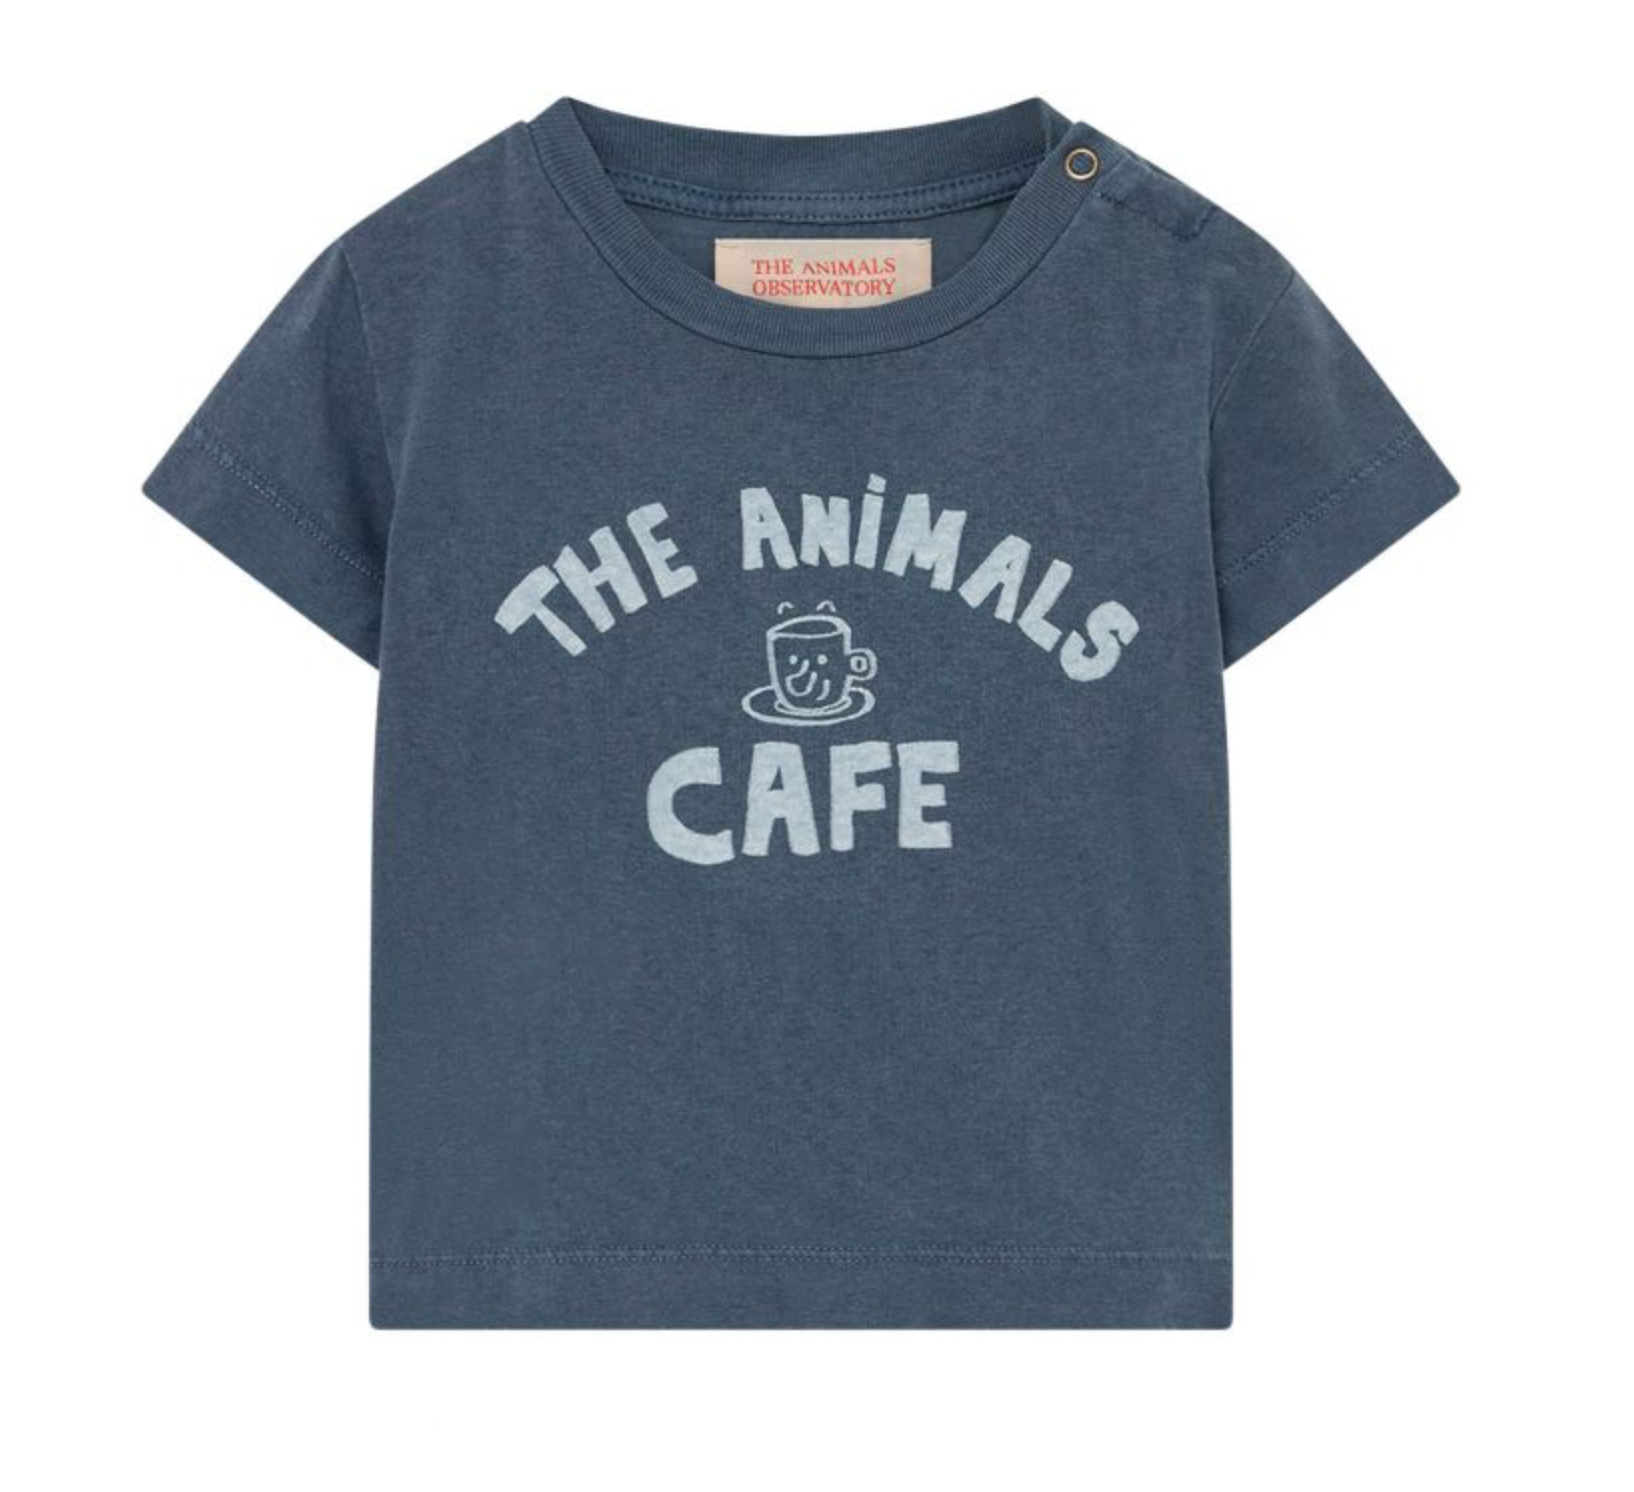 THE ANIMALS OBSERVATORY - T-shirt bleu "the animals cafe" - 4 ans